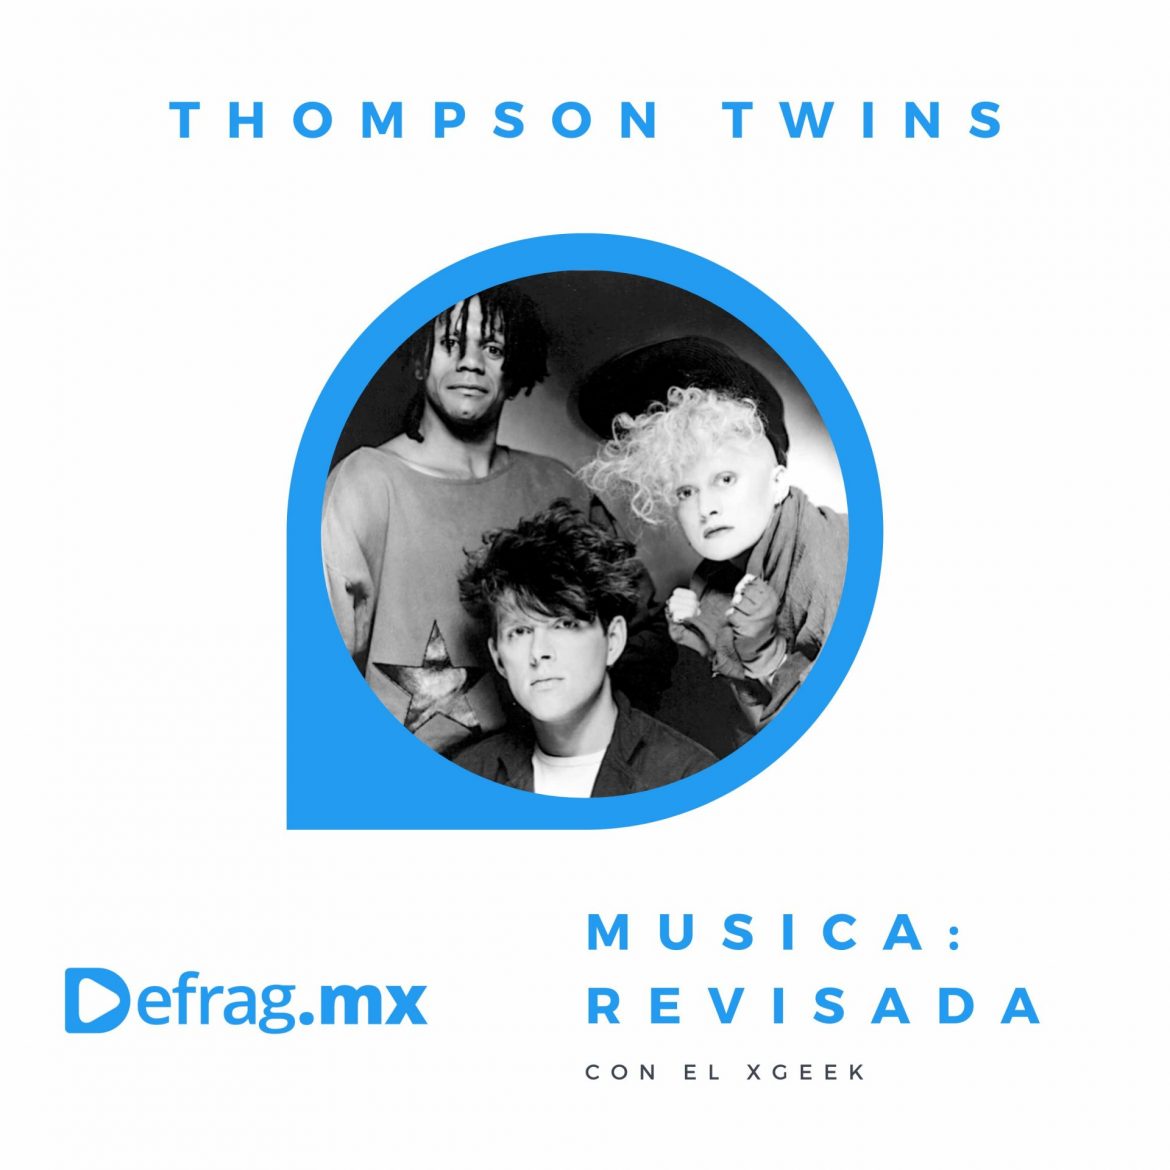 Defrag.mx Podcast Música Revisada Thompspn Twins Sugar Daddy